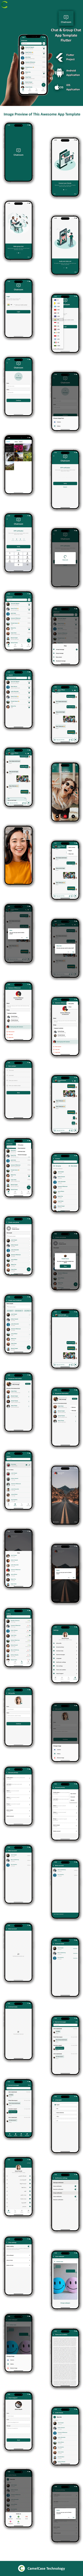 WhatsApp Clone App Template in Flutter | Chat & Group Chat App Template in Flutter | Multi Language - 7